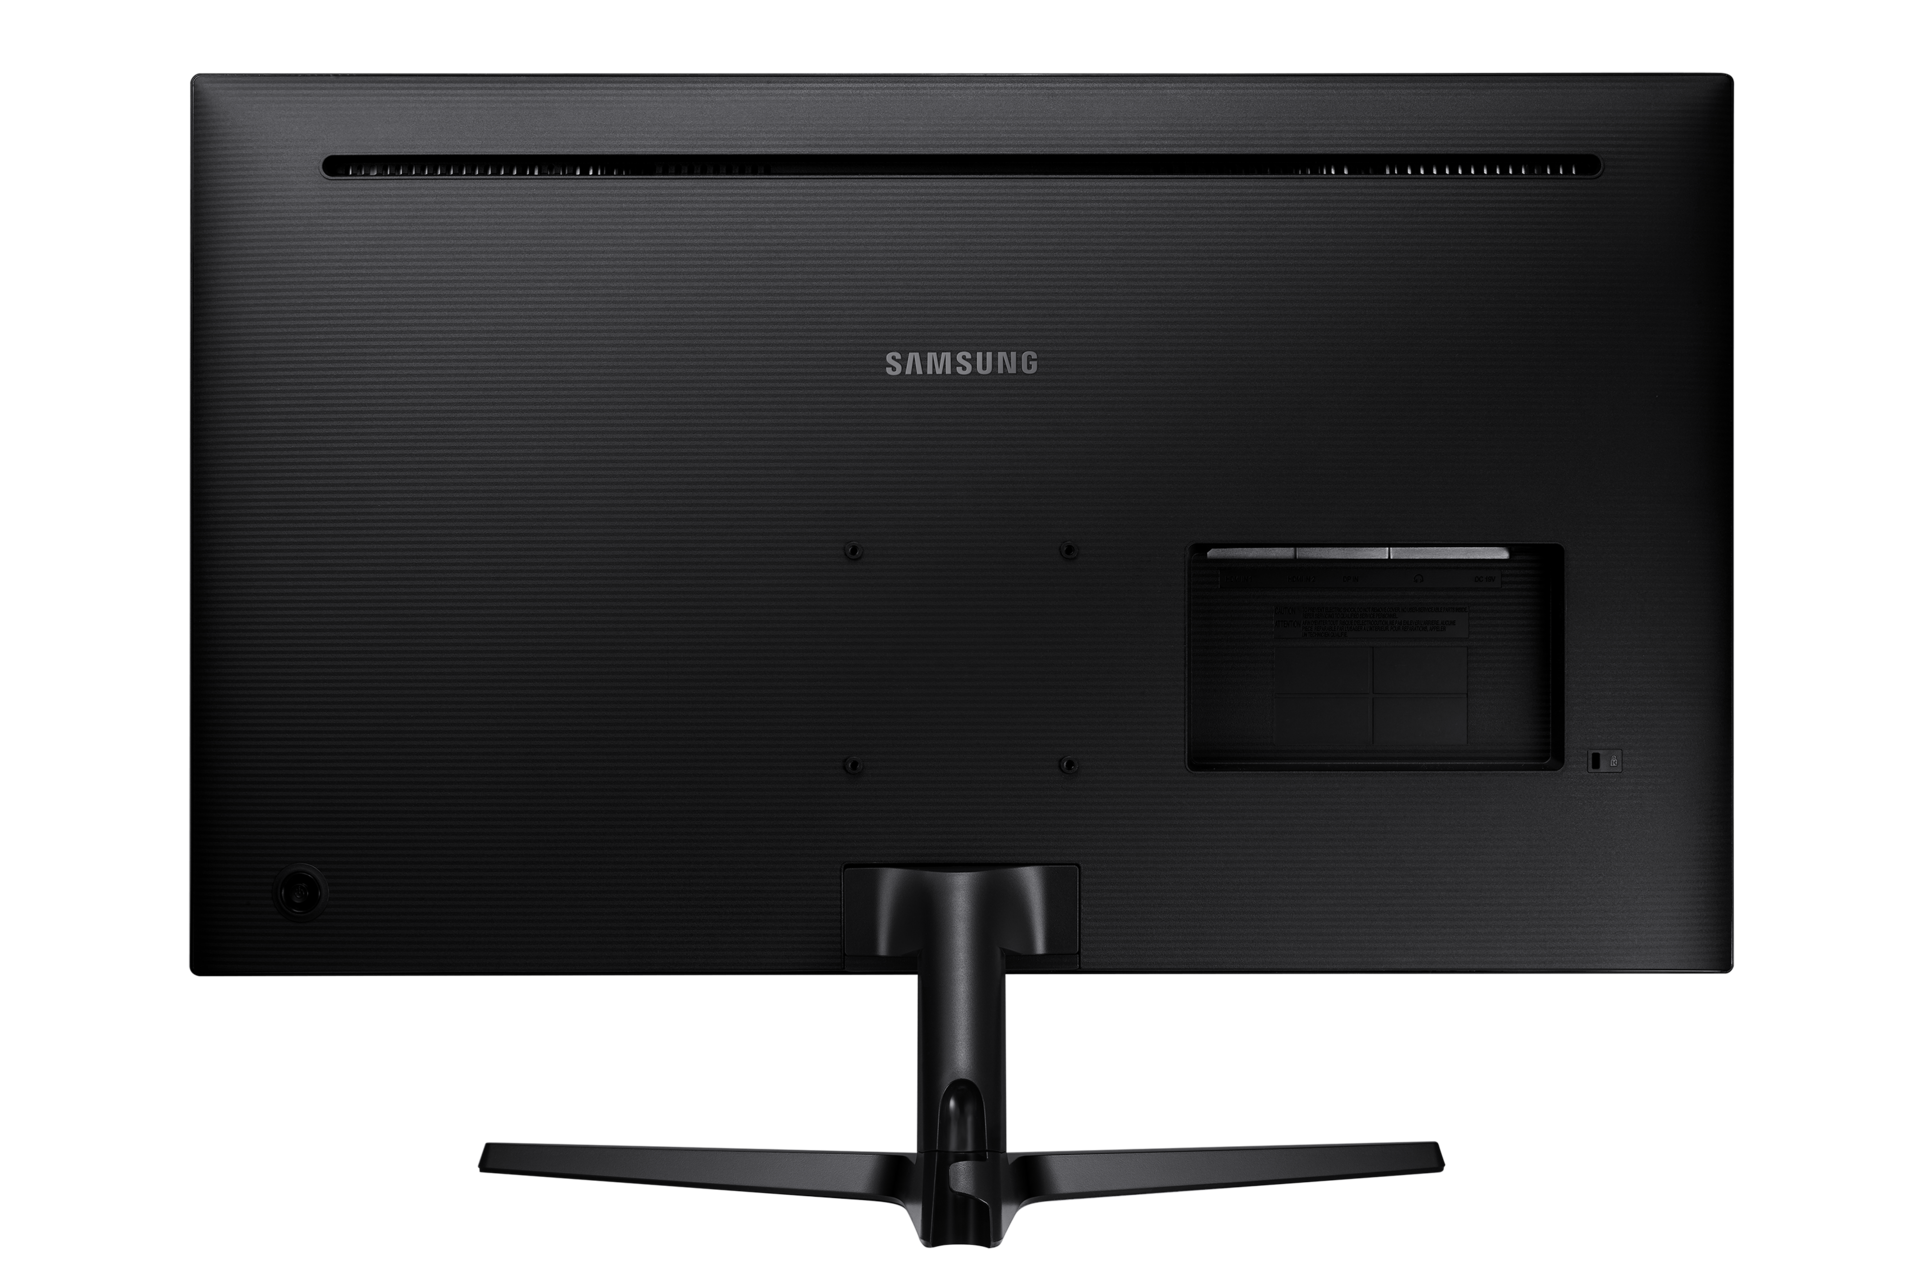 monitor SAMSUNG LED J590 ULTRA HD 4K 32″